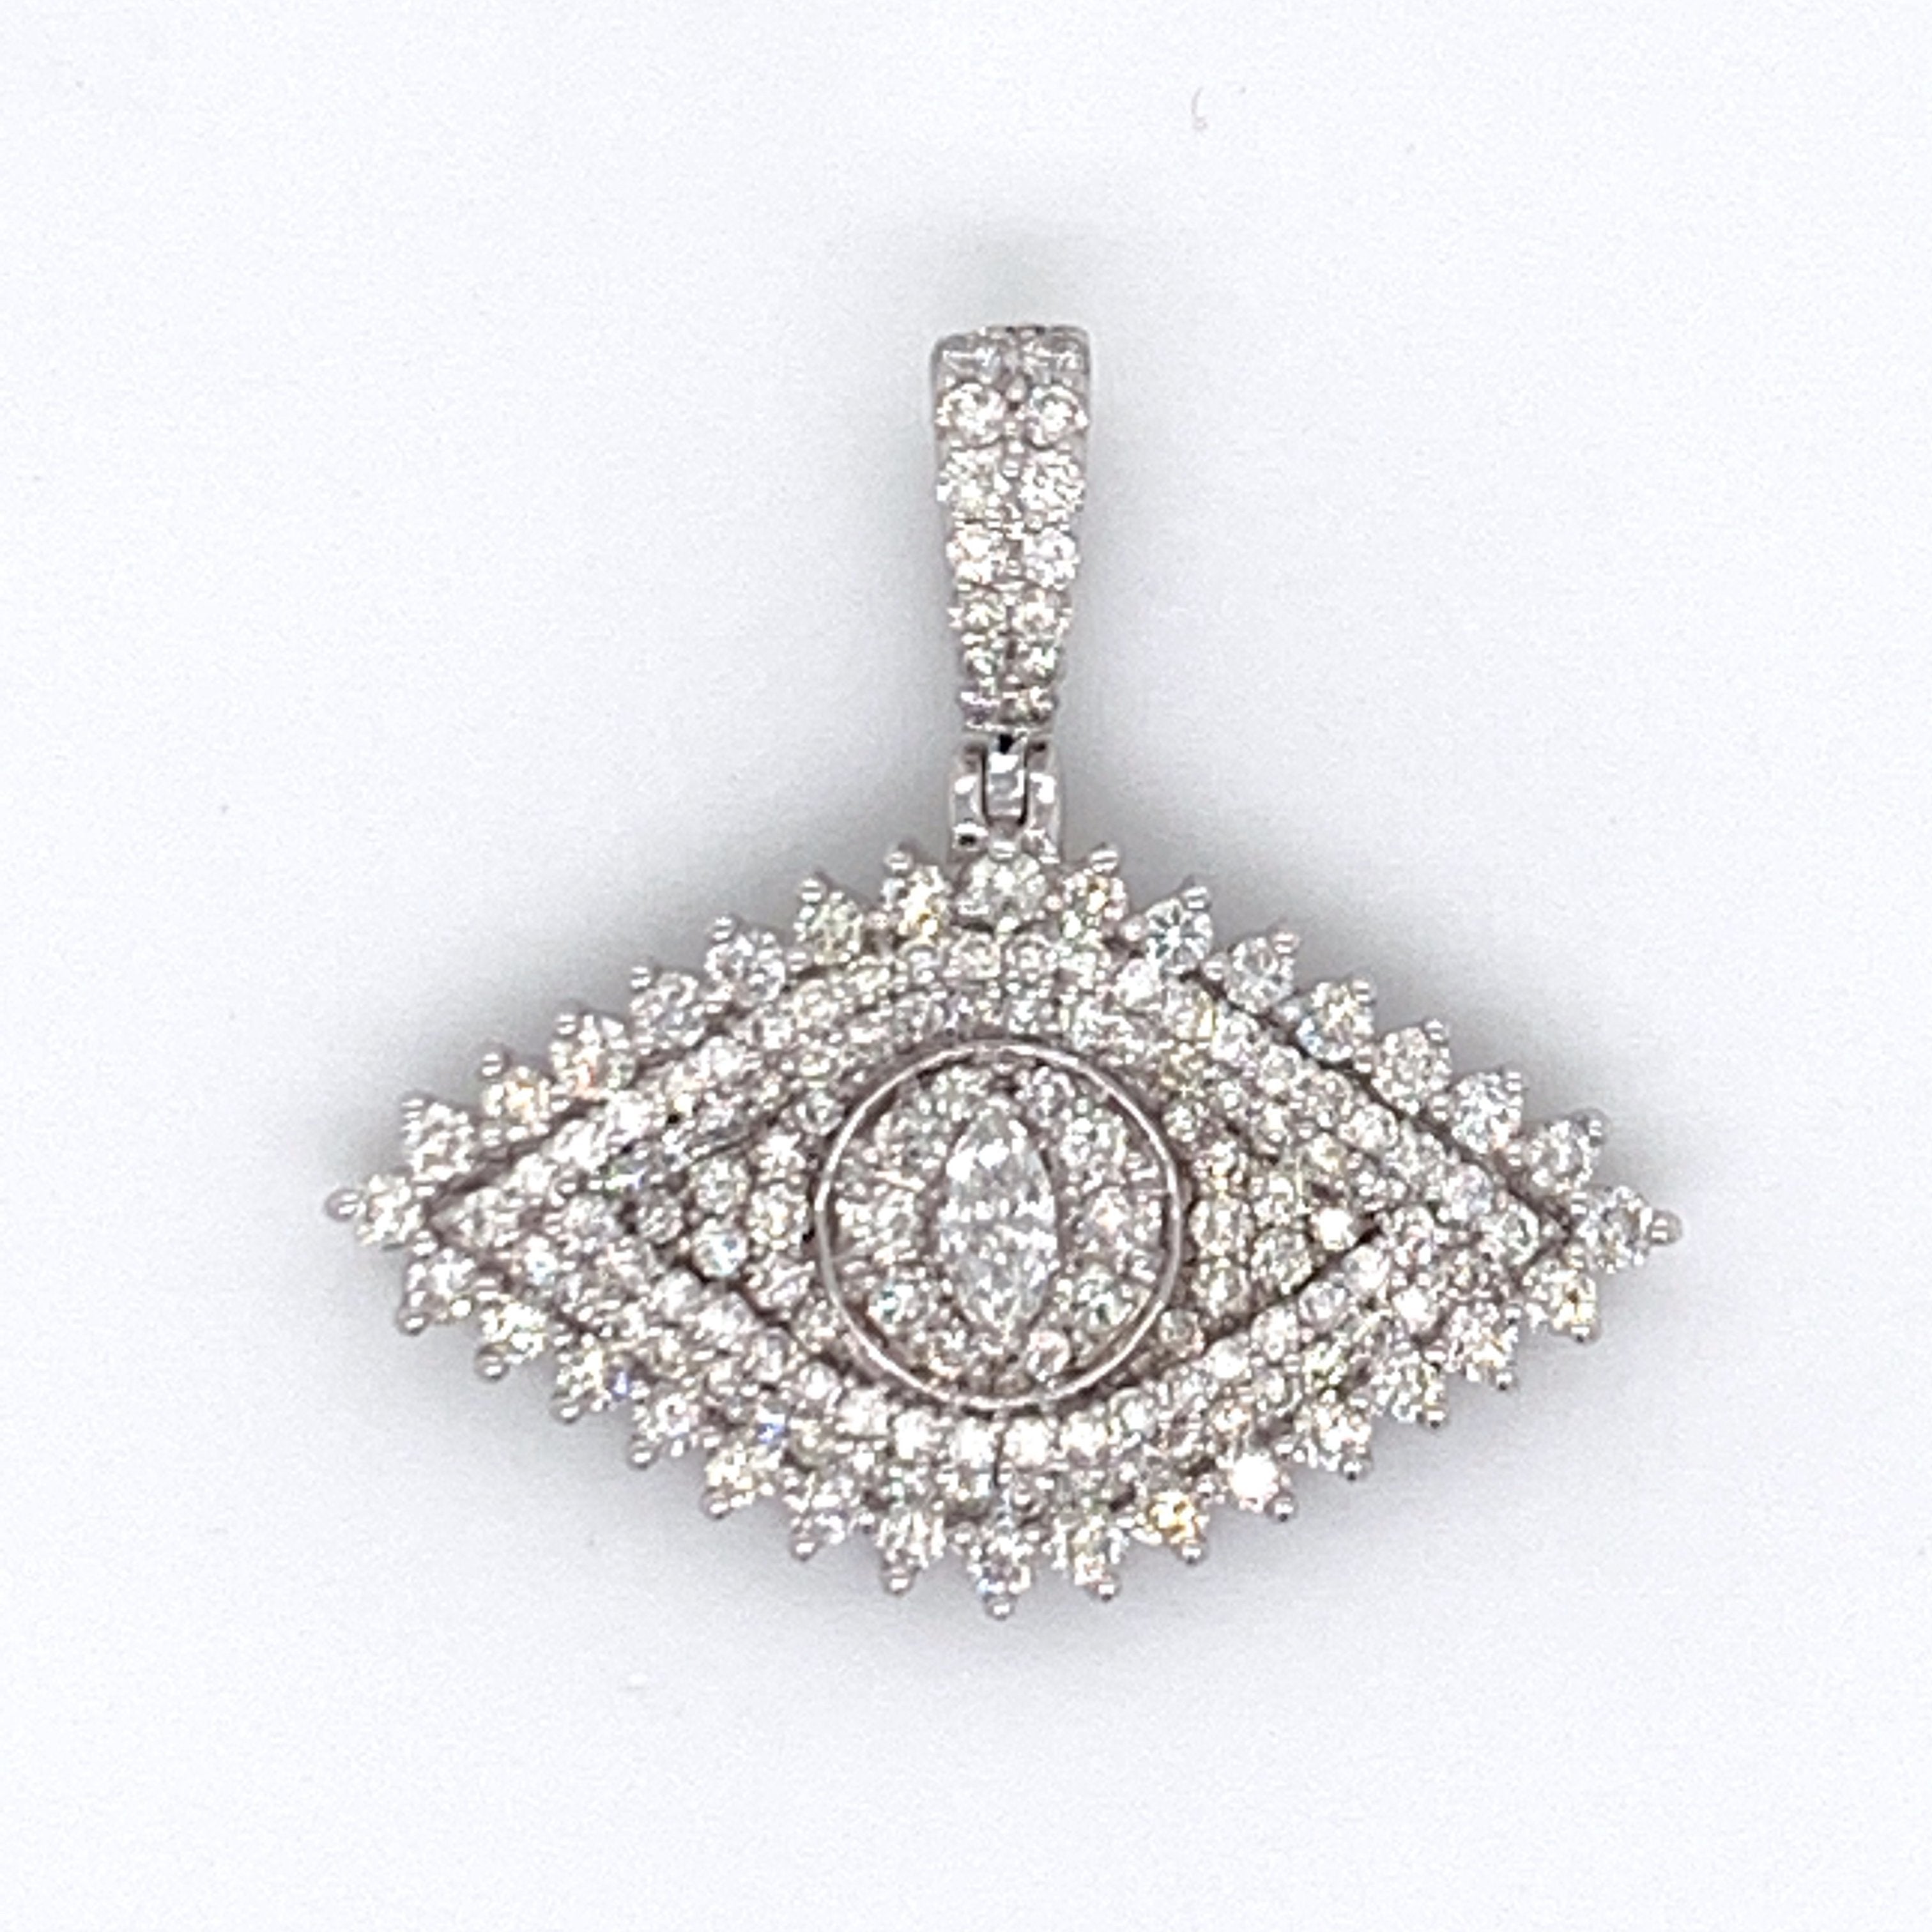 1.50 CT. Diamond Eye Pendant in 14K White Gold - White Carat Diamonds 